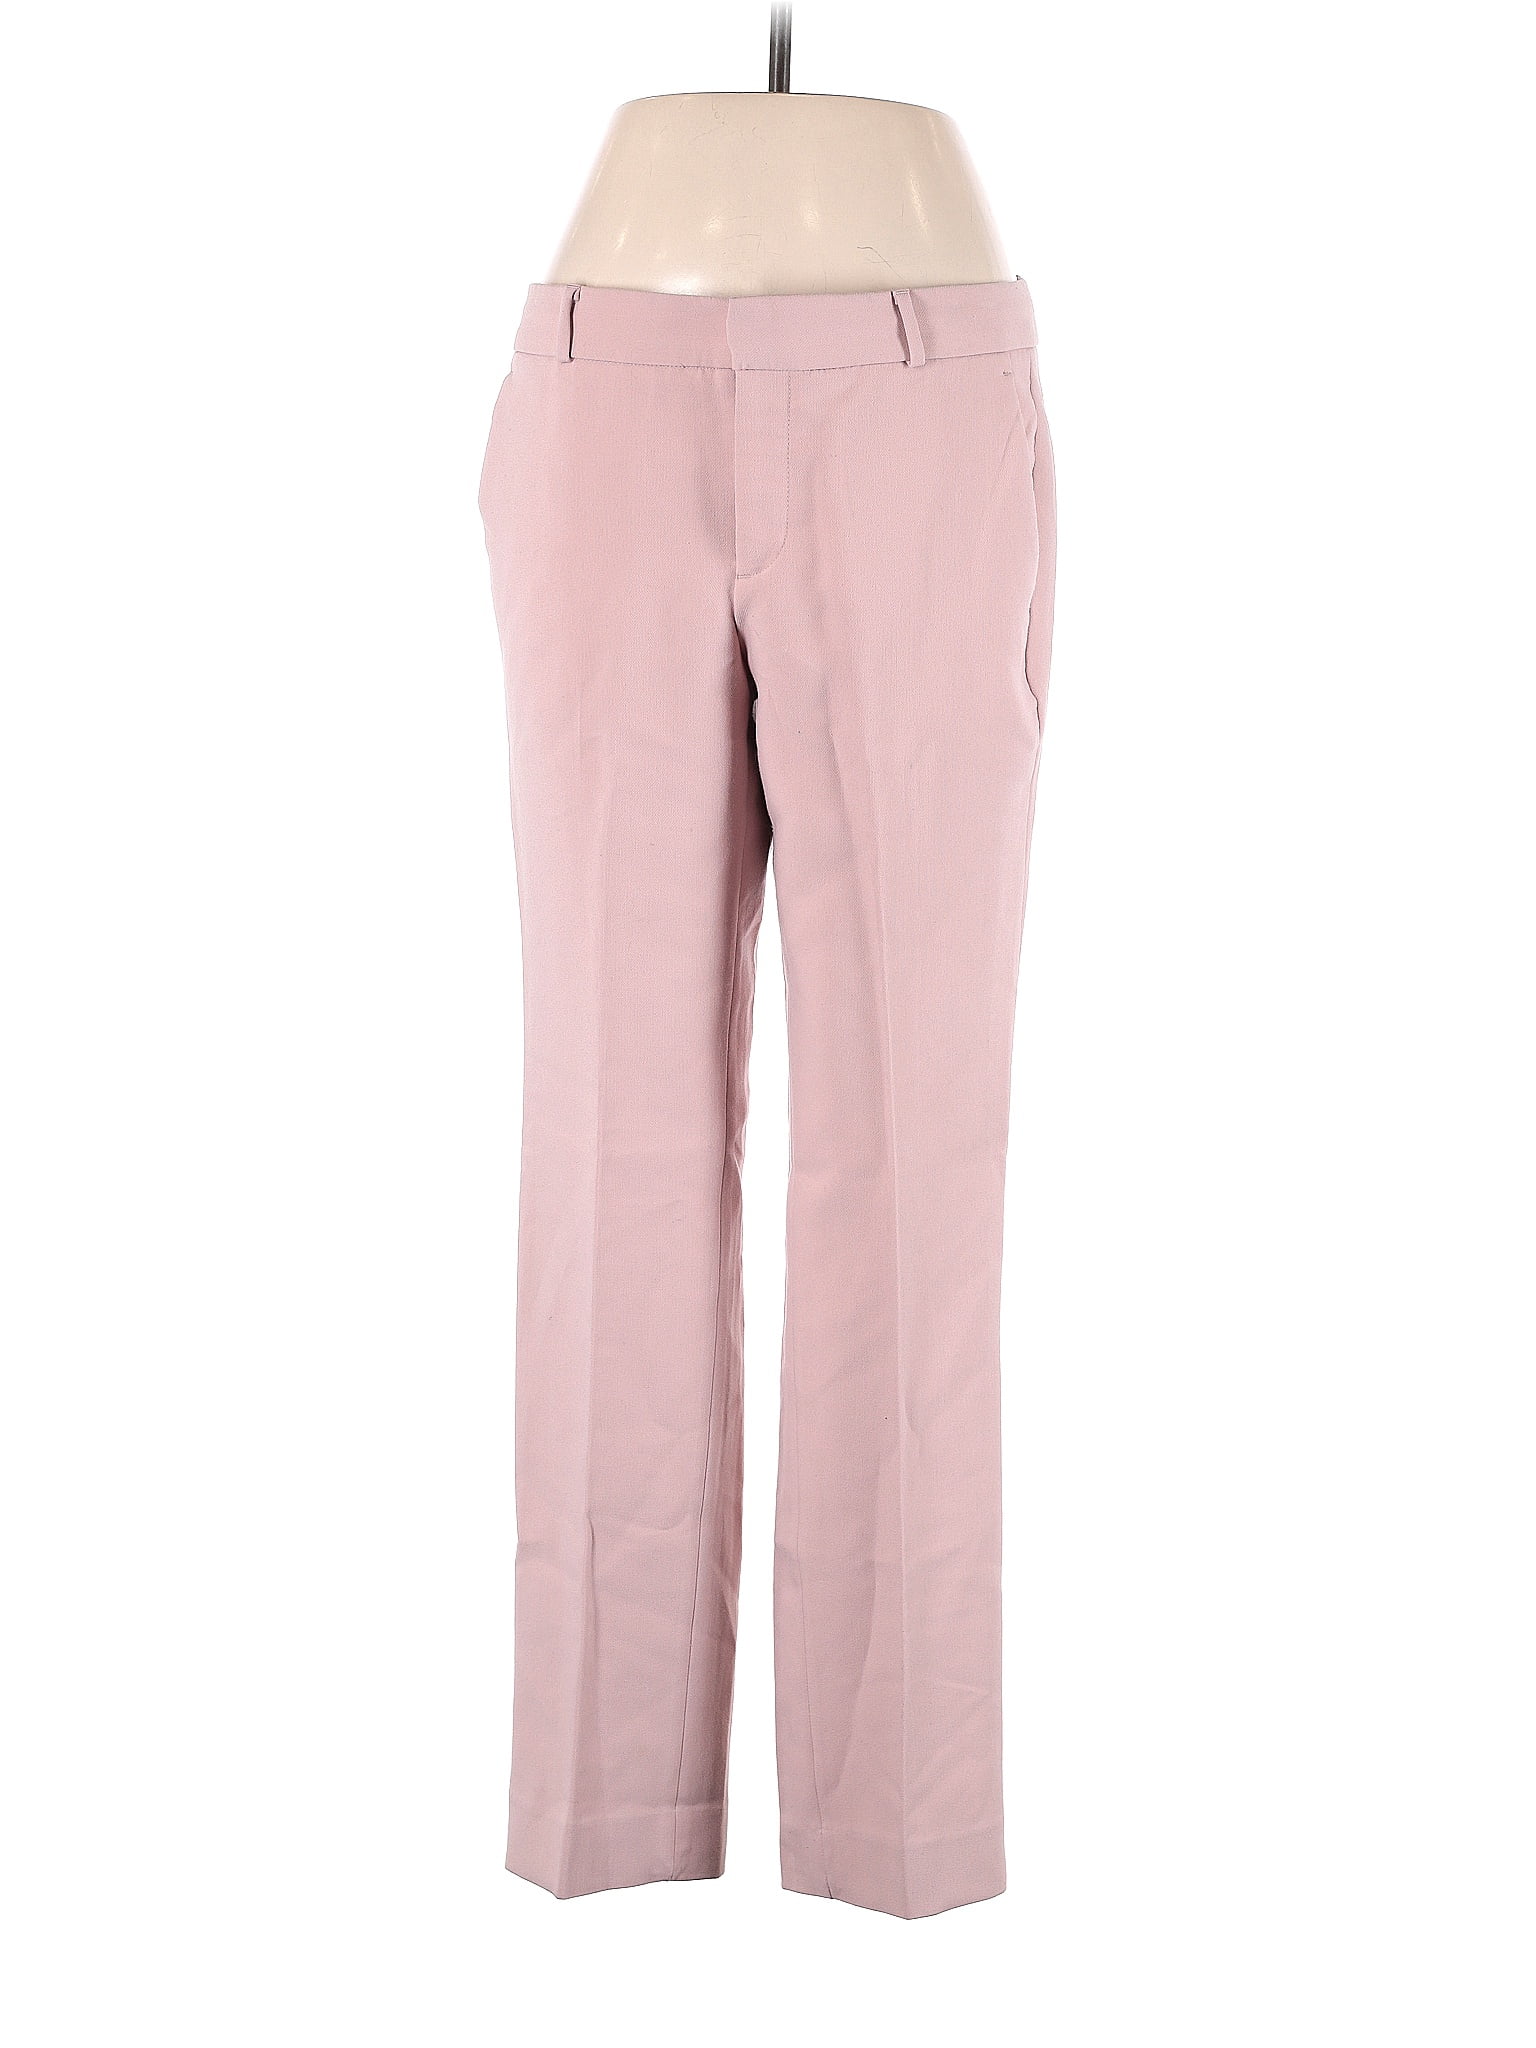 Banana Republic Factory Store Pink Dress Pants Size 6 (Petite) - 68% off